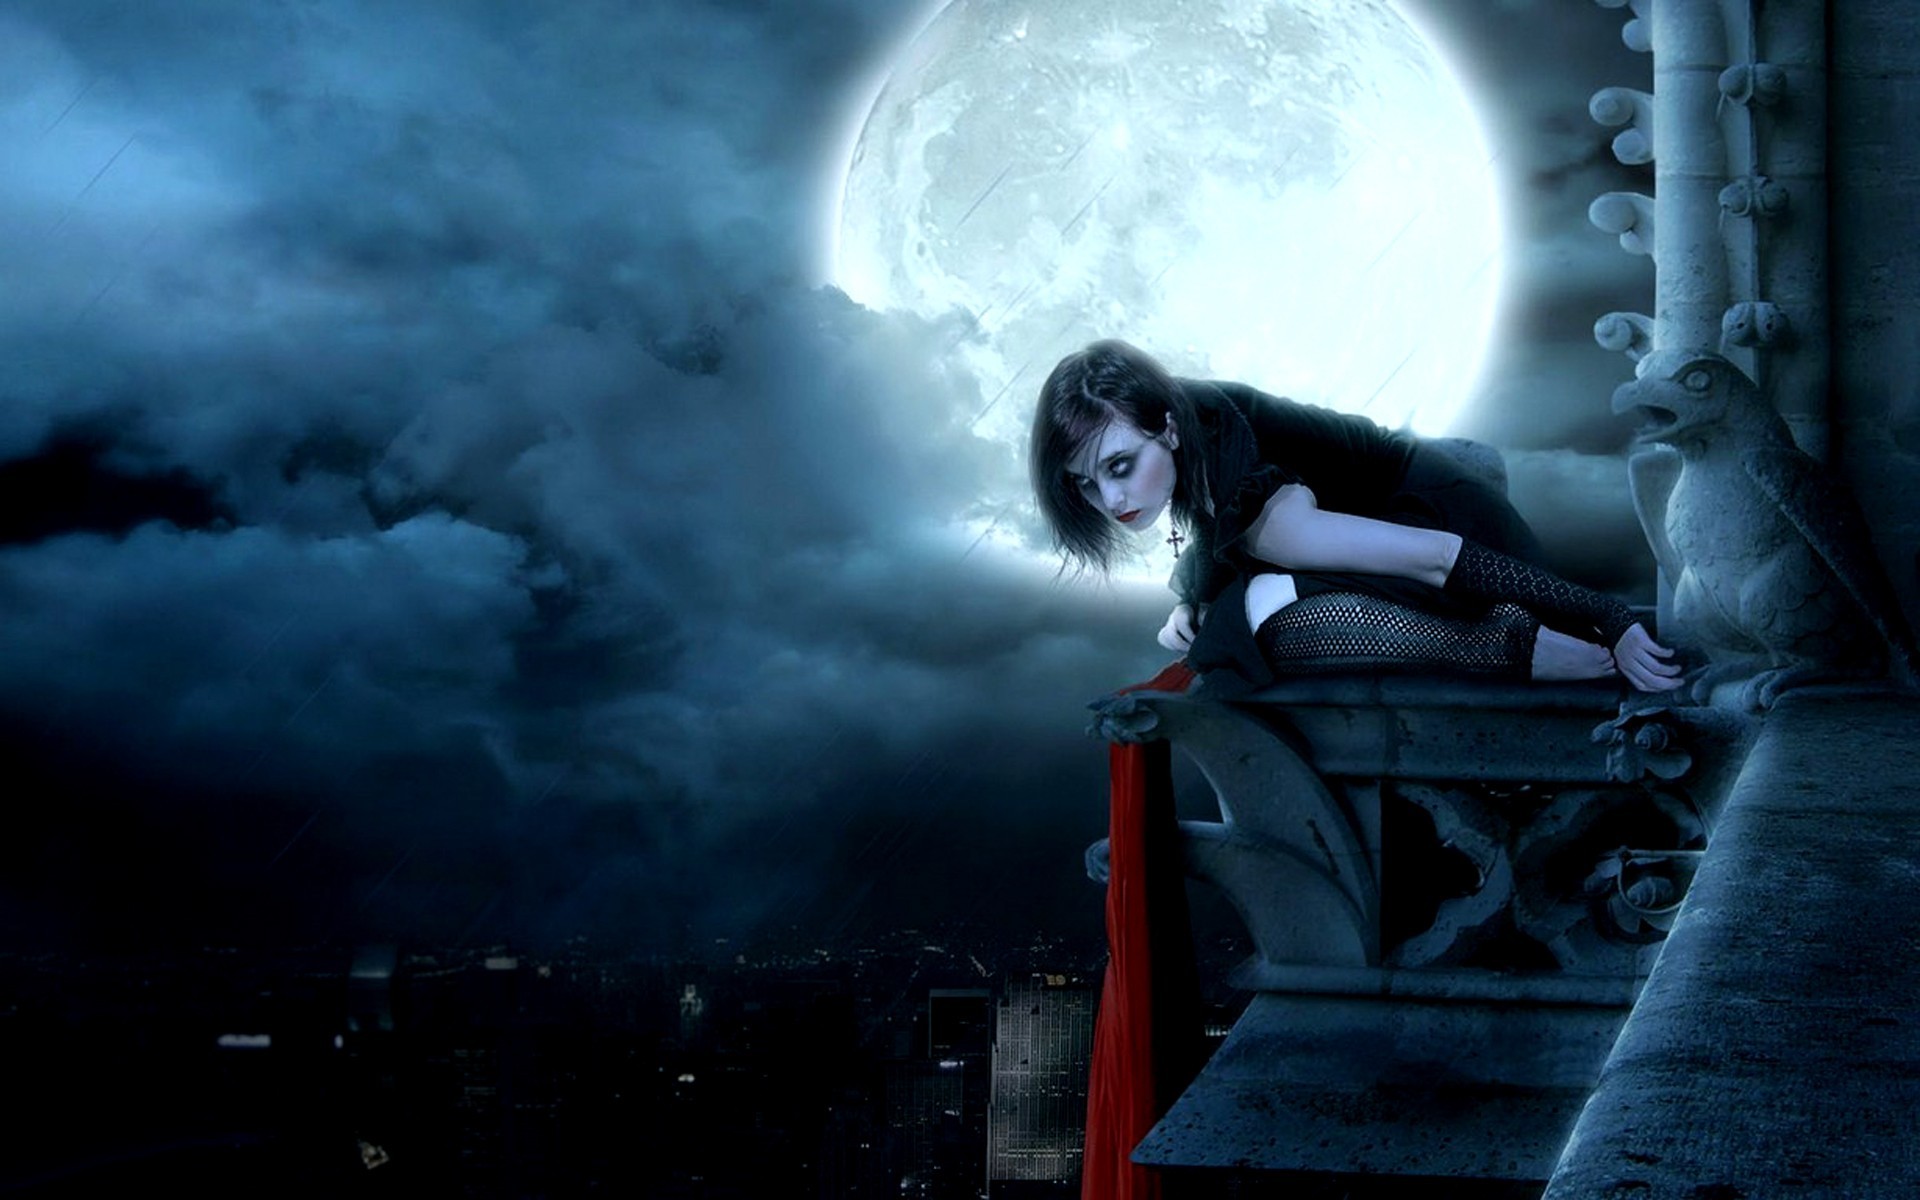 Goth girl in the night wallpaper 5088